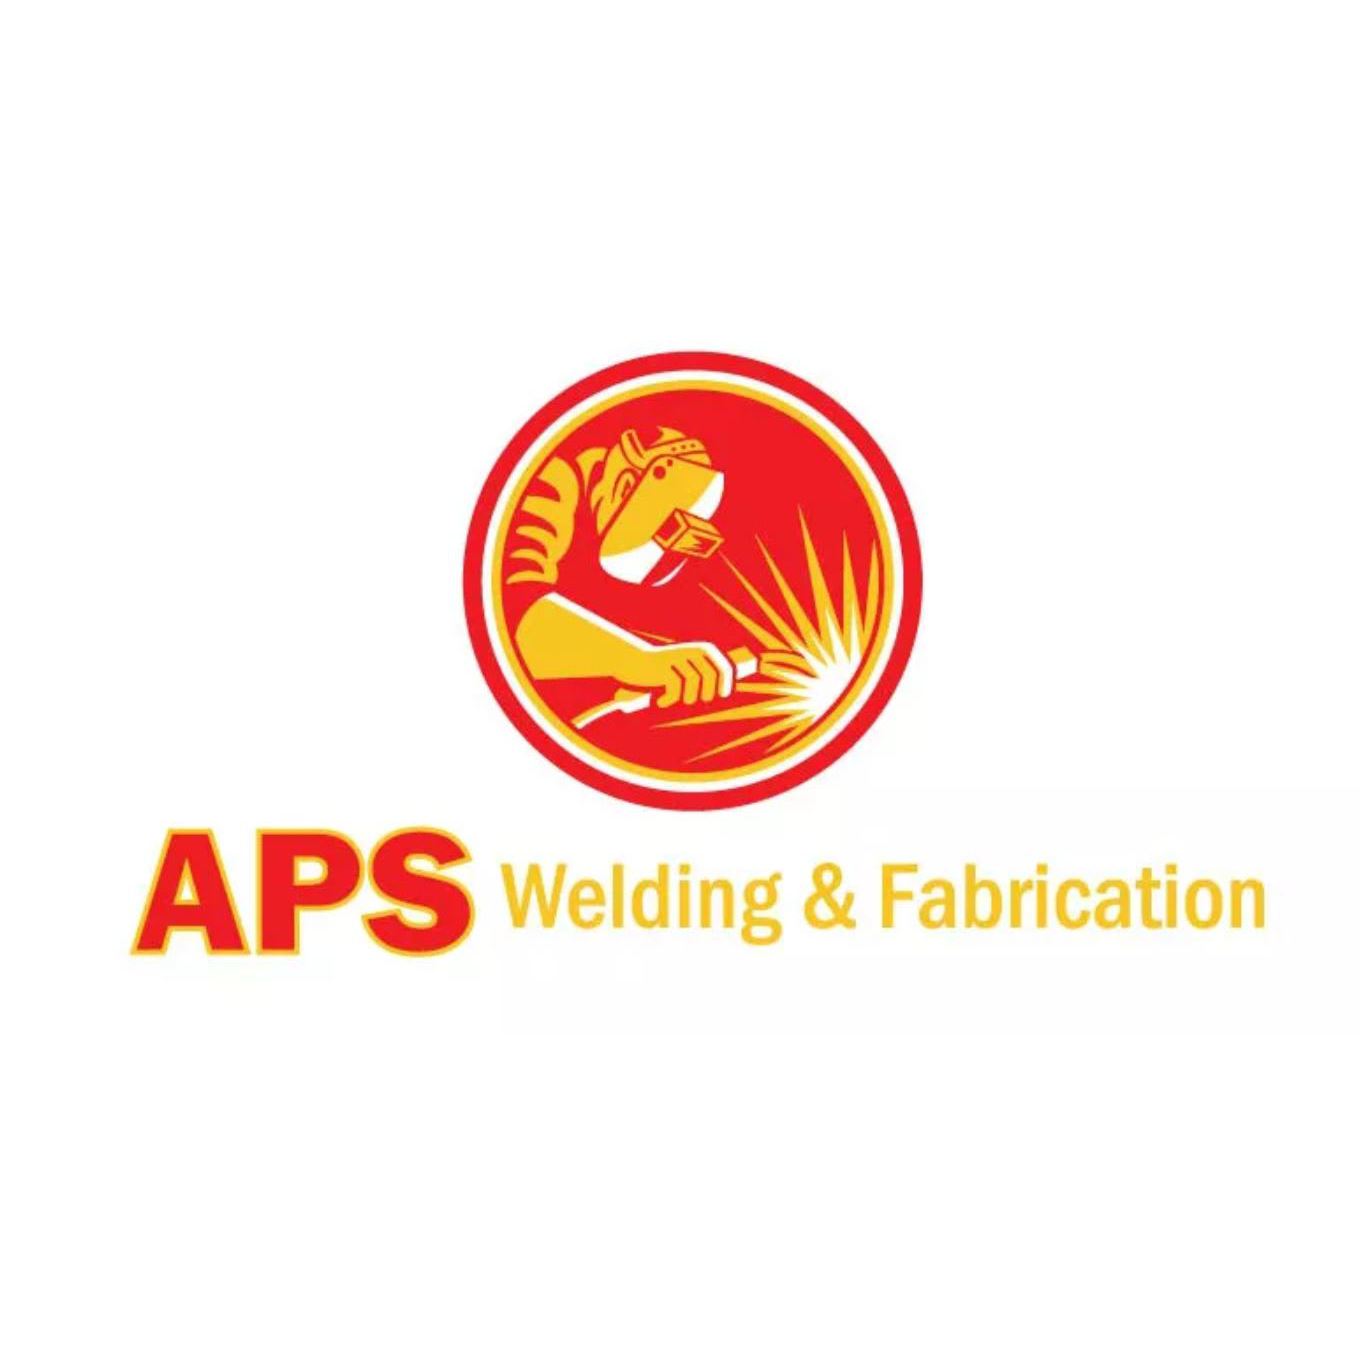 A.P.S Welding & Fabrication Services Ltd logo